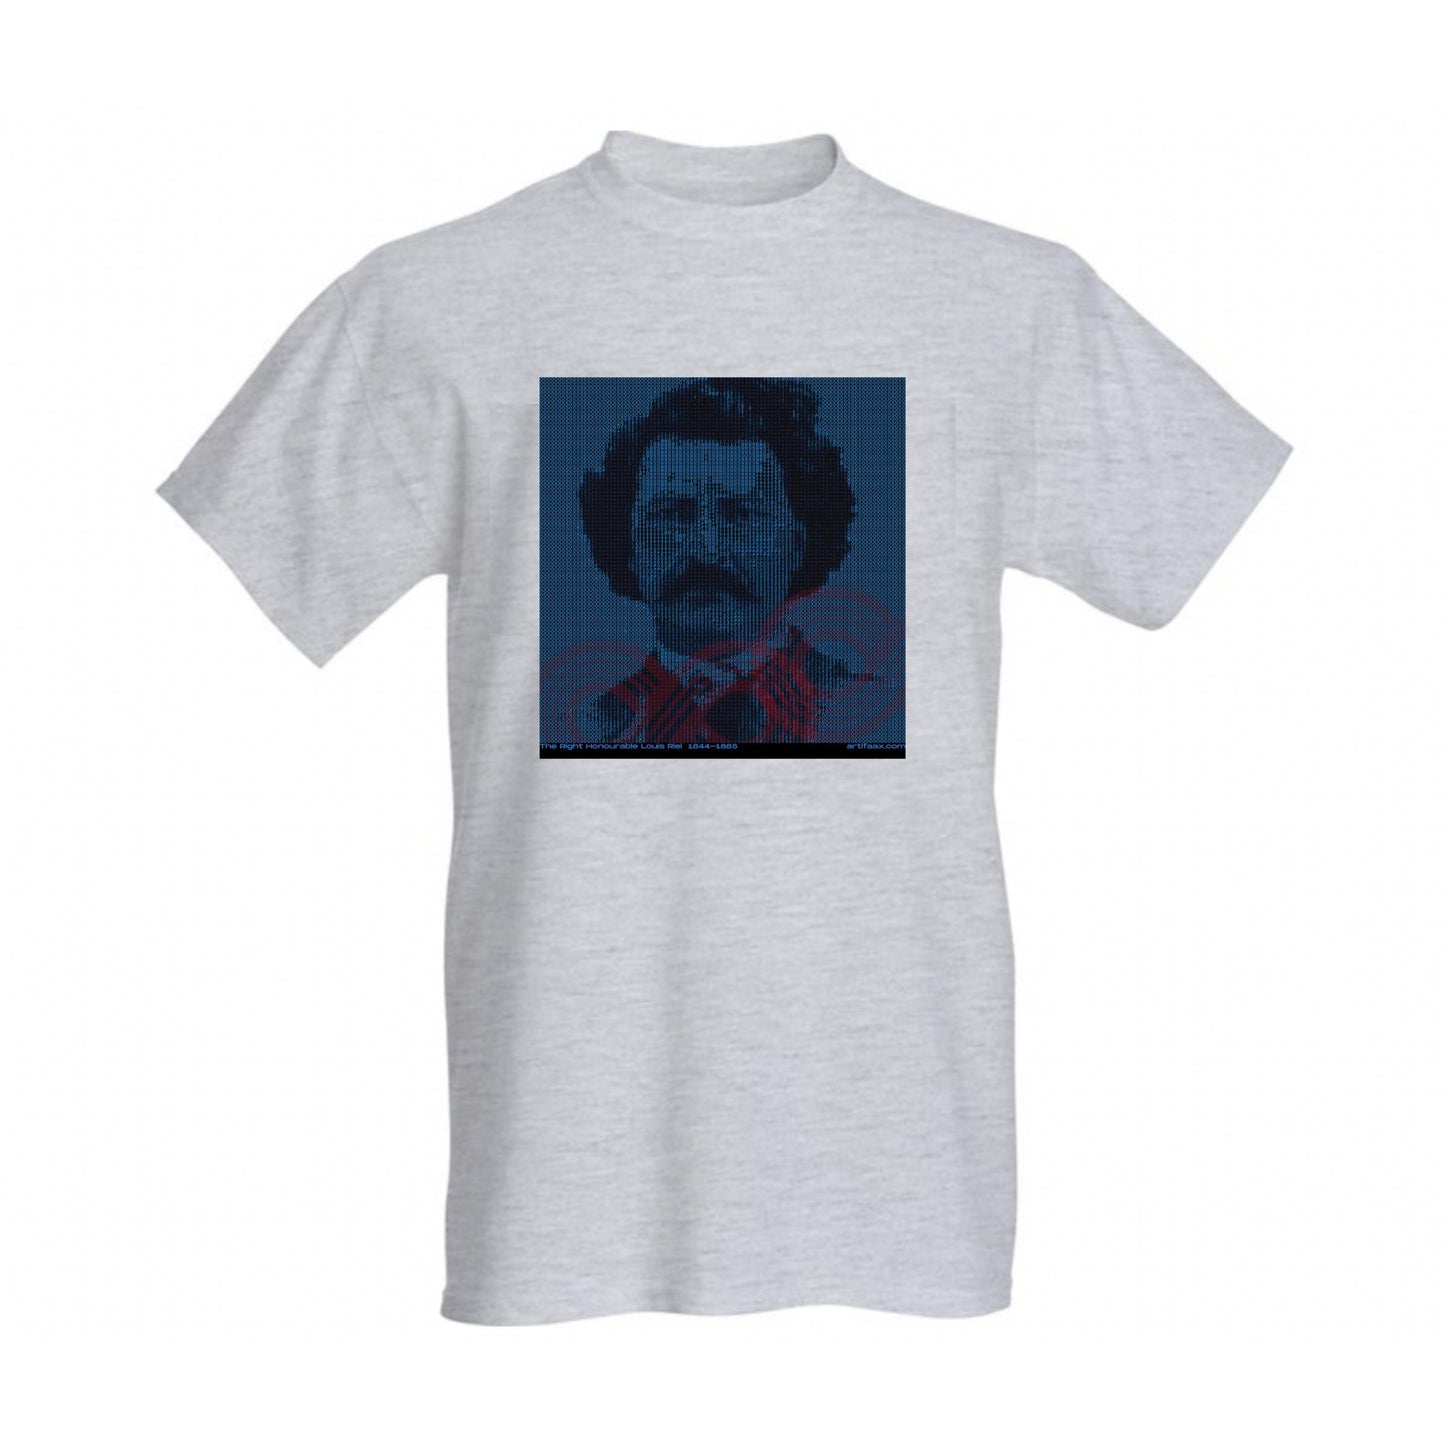 Louis Riel Graphic Print on Ash T shirt